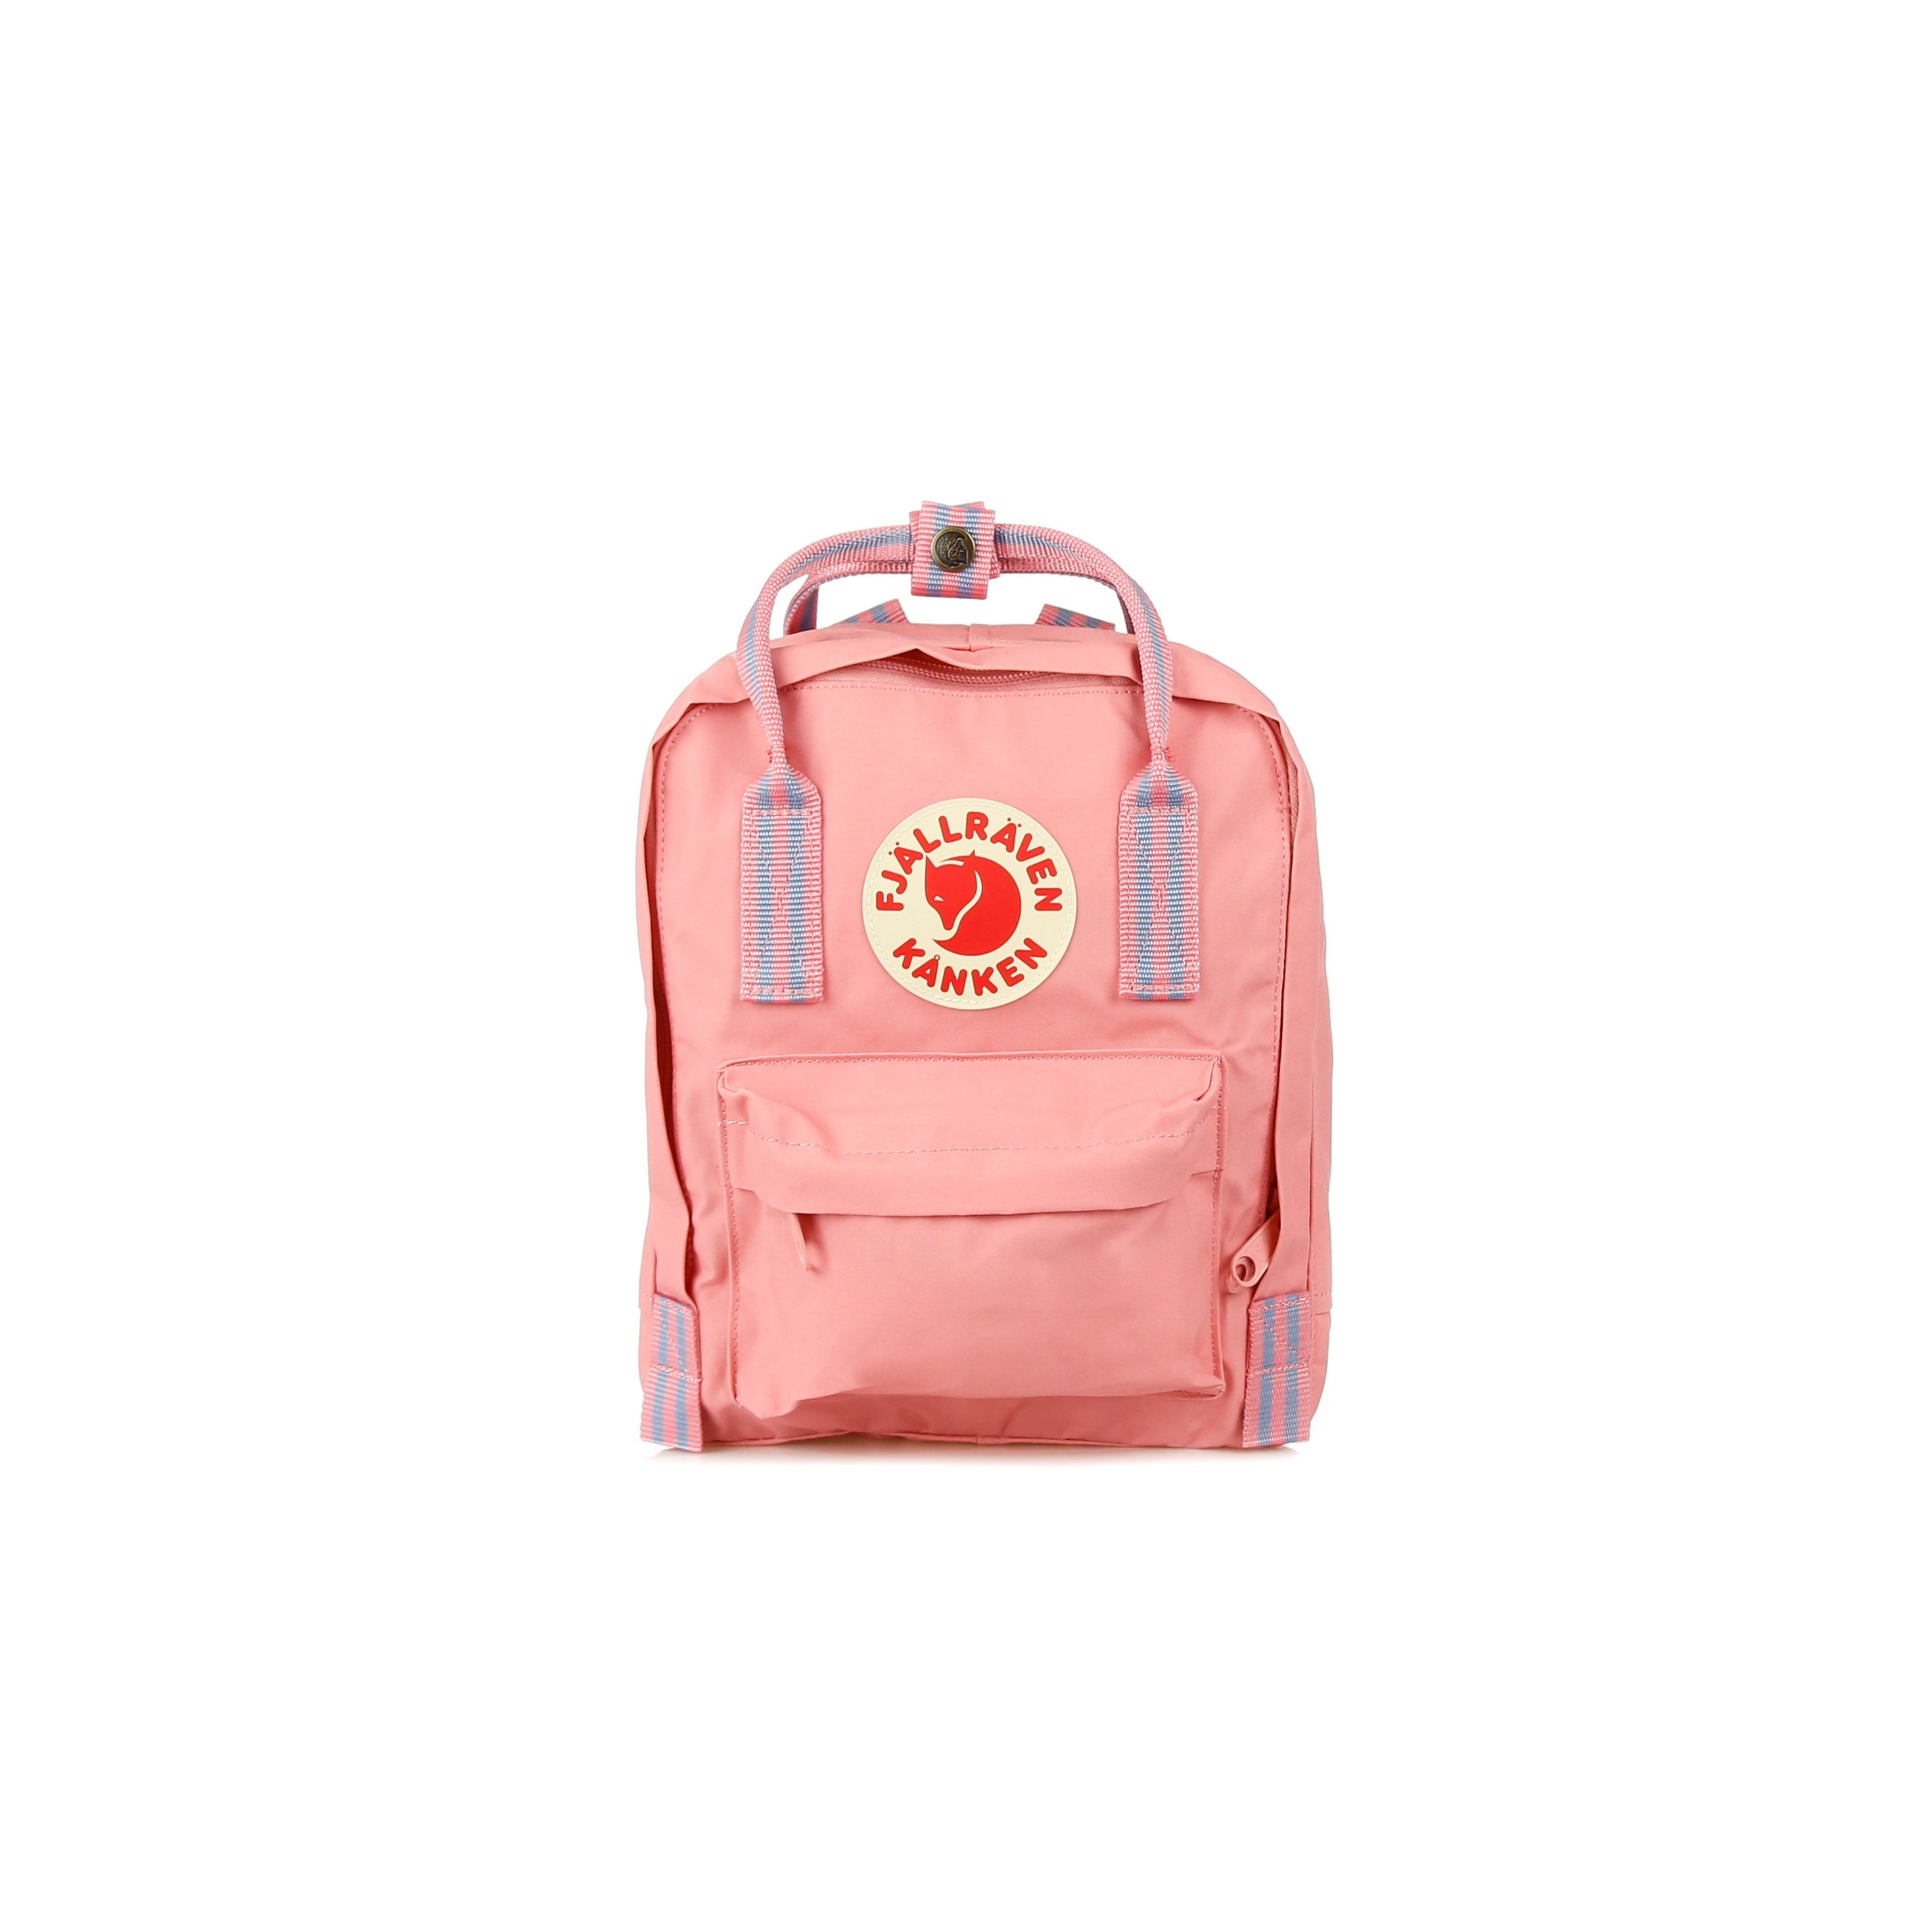 Unisex Kanken Mini Pink/long Stripes backpack